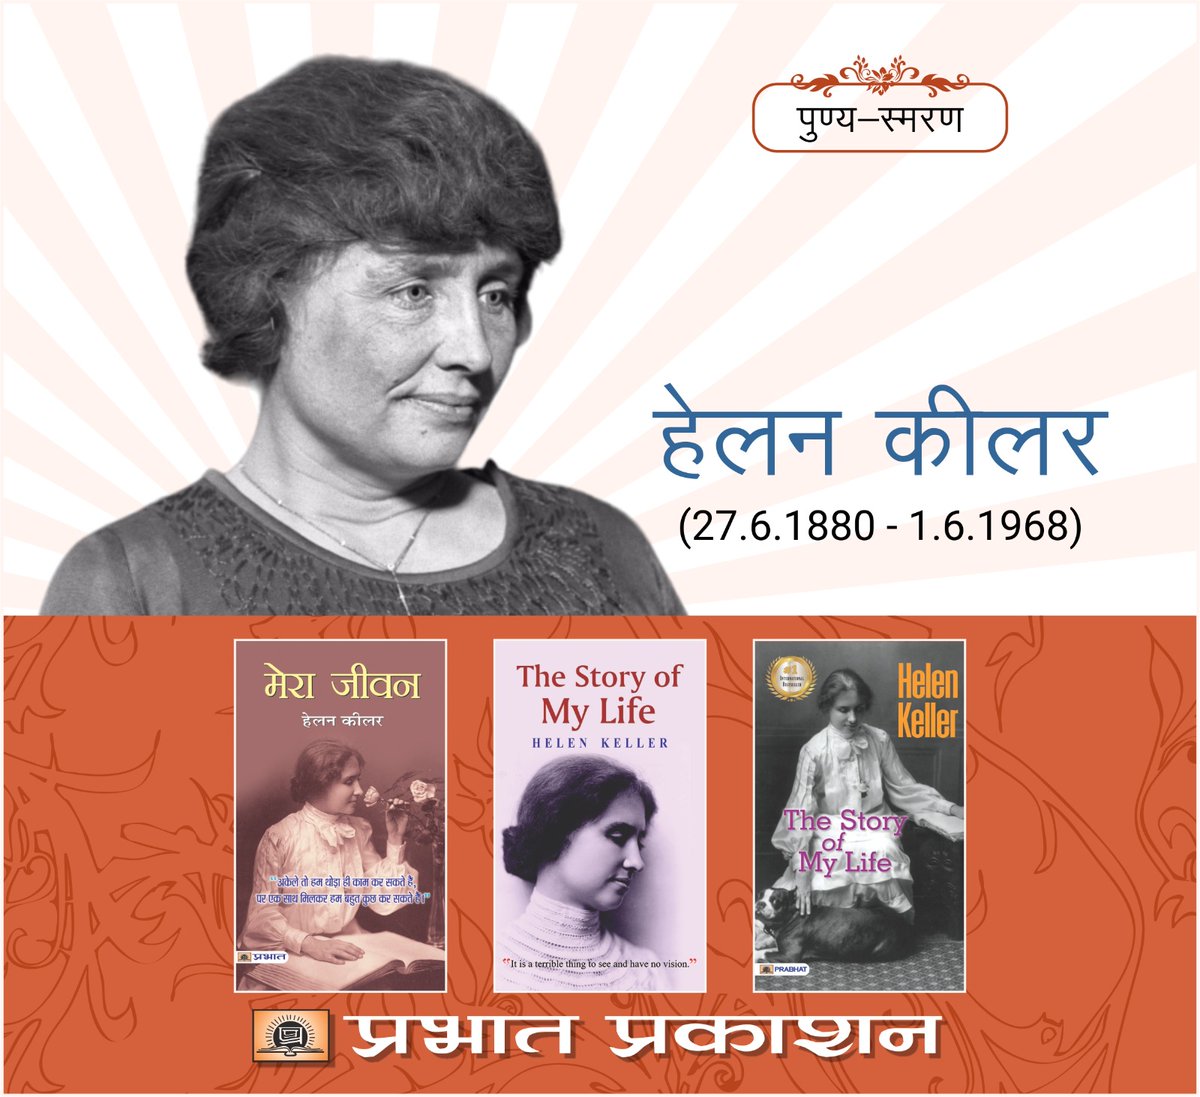 #HelenKeller #americanauthor #author #biography #englishbook #hindibook #author #reader #bestbook
buy: amzn.to/3NtZJ6d